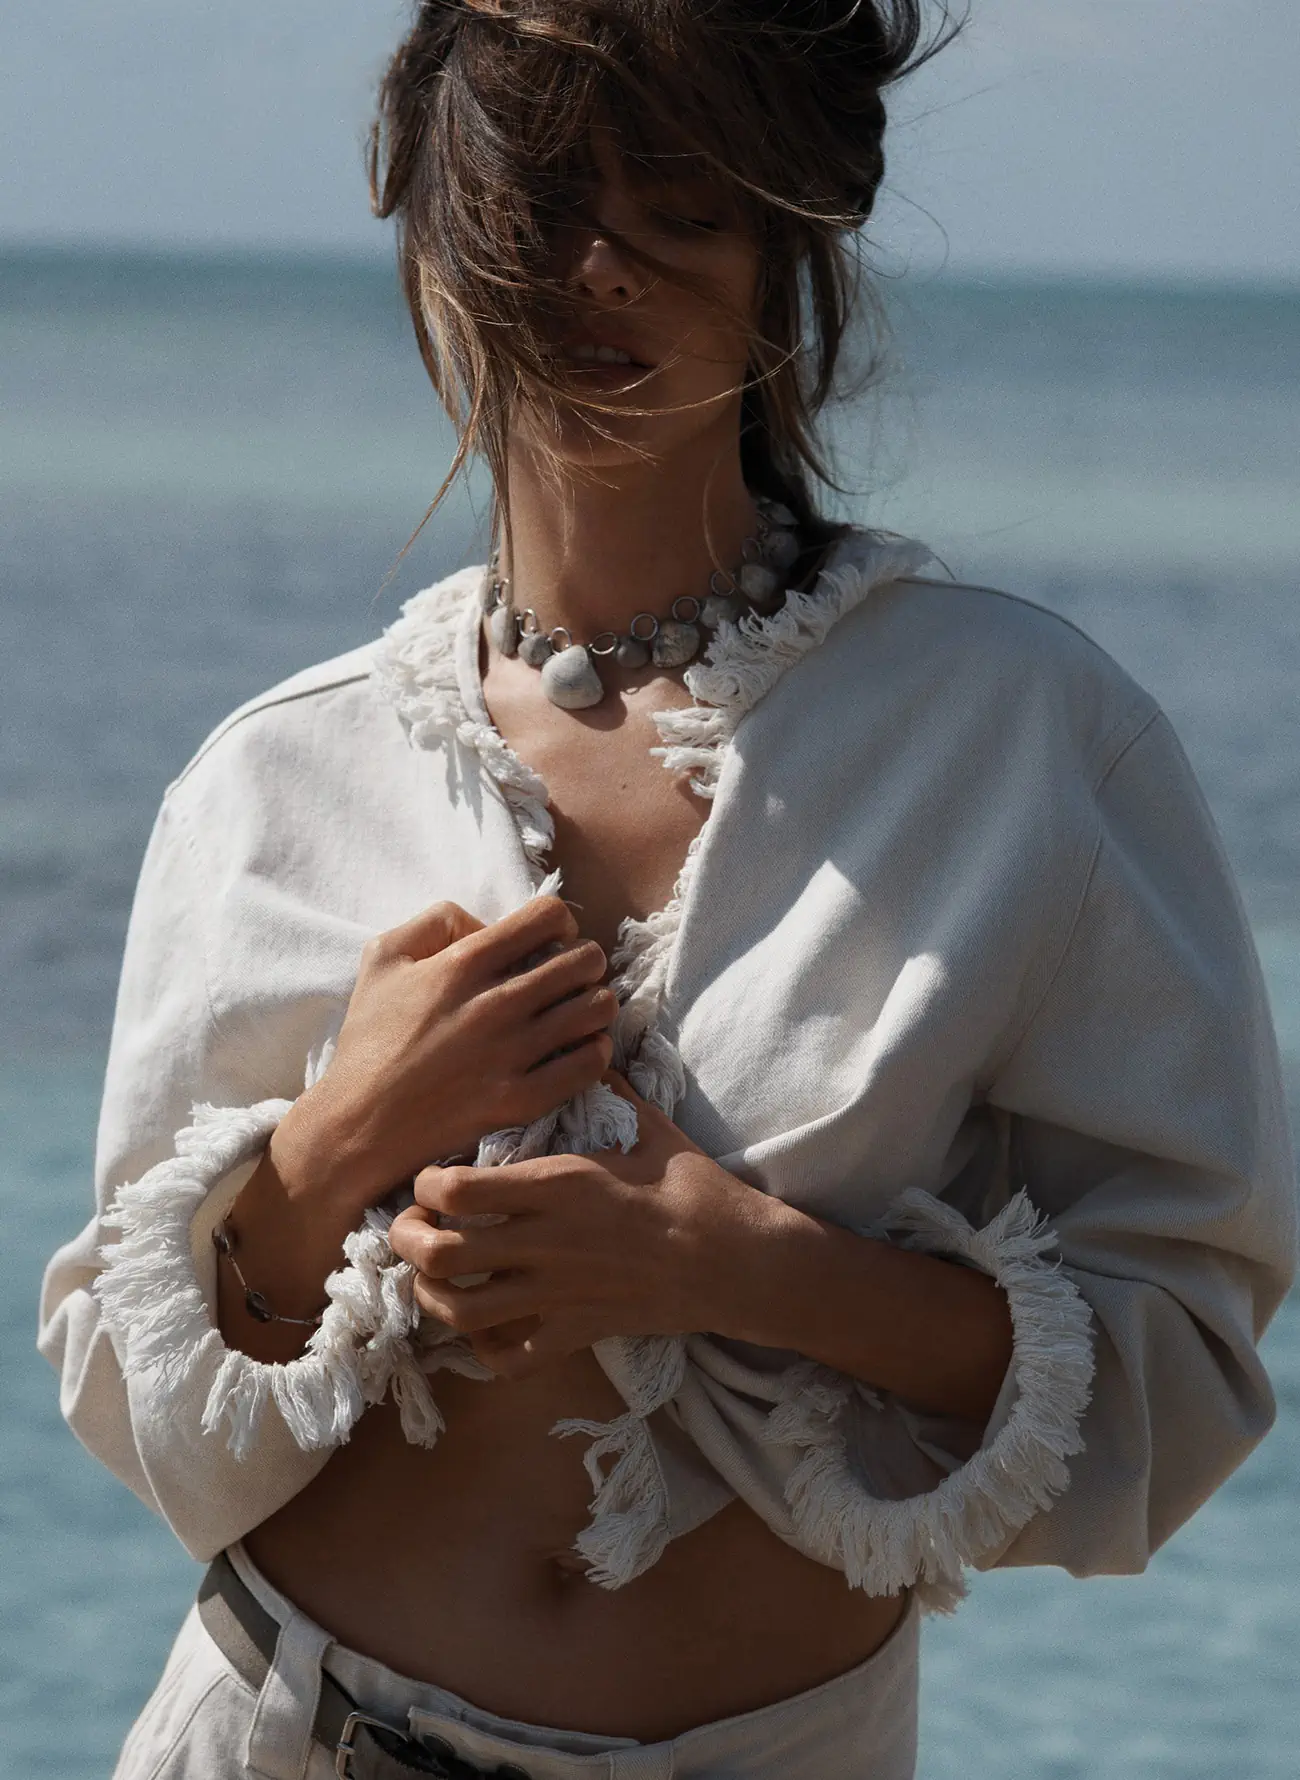 Alessandra Ambrosio covers Vogue Mexico & Latin America August 2023 by Blair Getz Mezibov